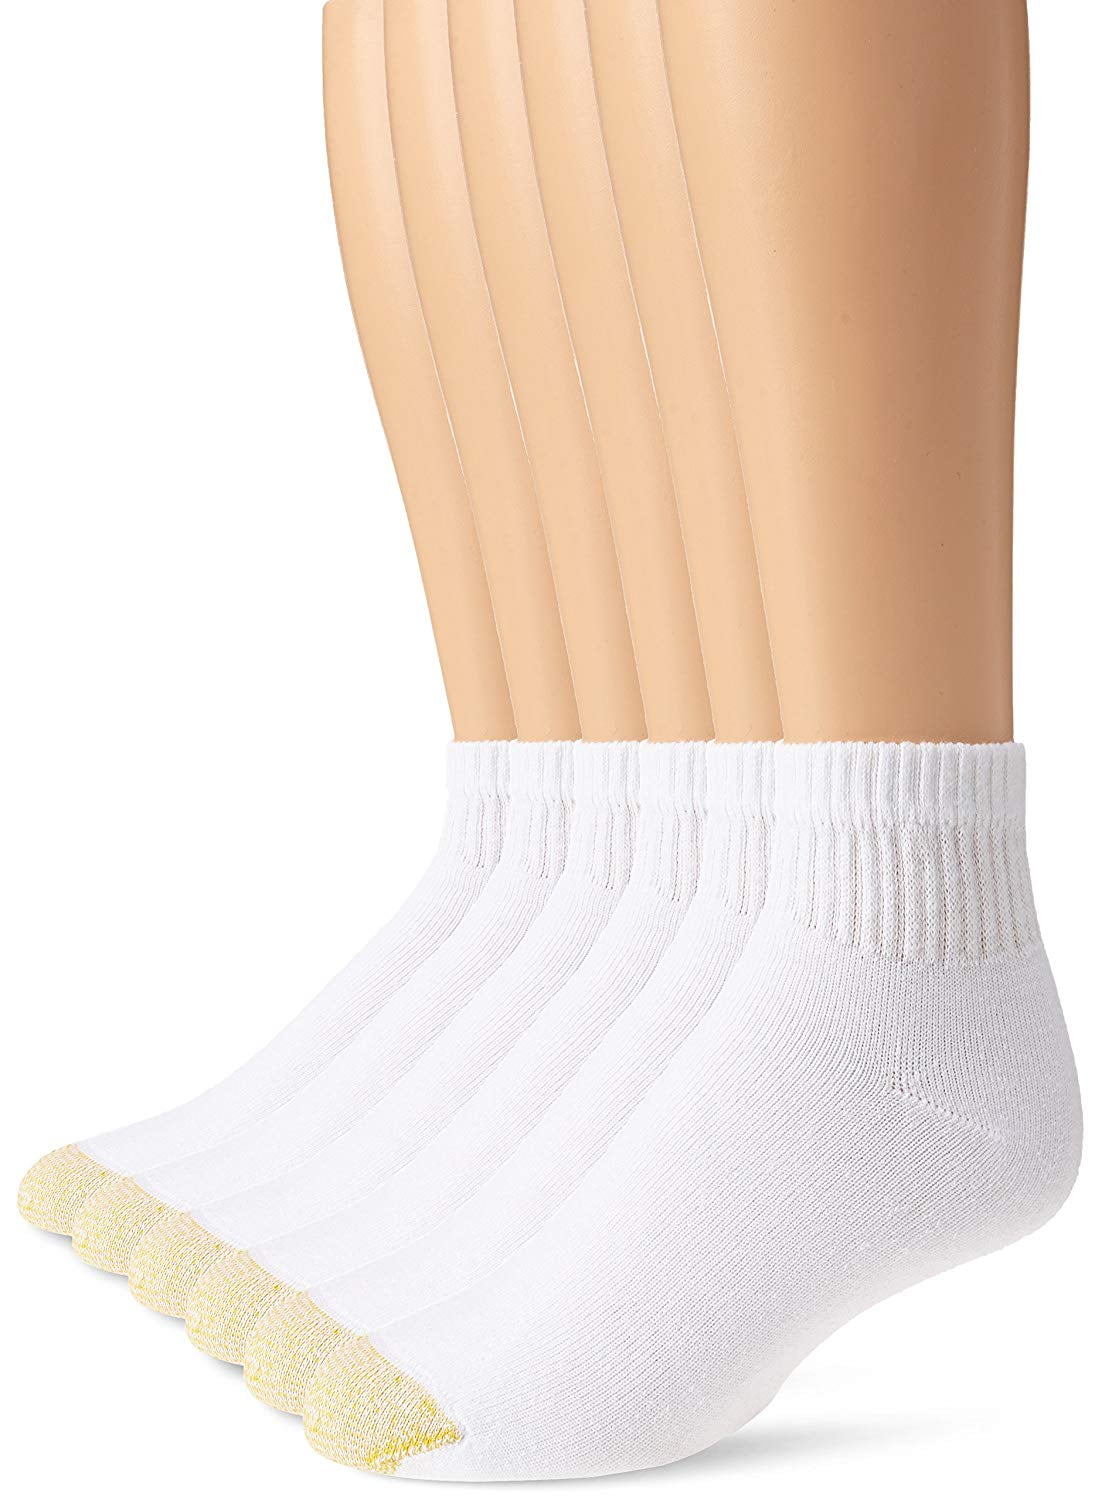 Gold Toe Men's 6 Pack Cotton Quarter Athletic Socks (656P), White, Shoe  Size: 6-12.5 Size: 10-13, 100% Cotton By GoldToe